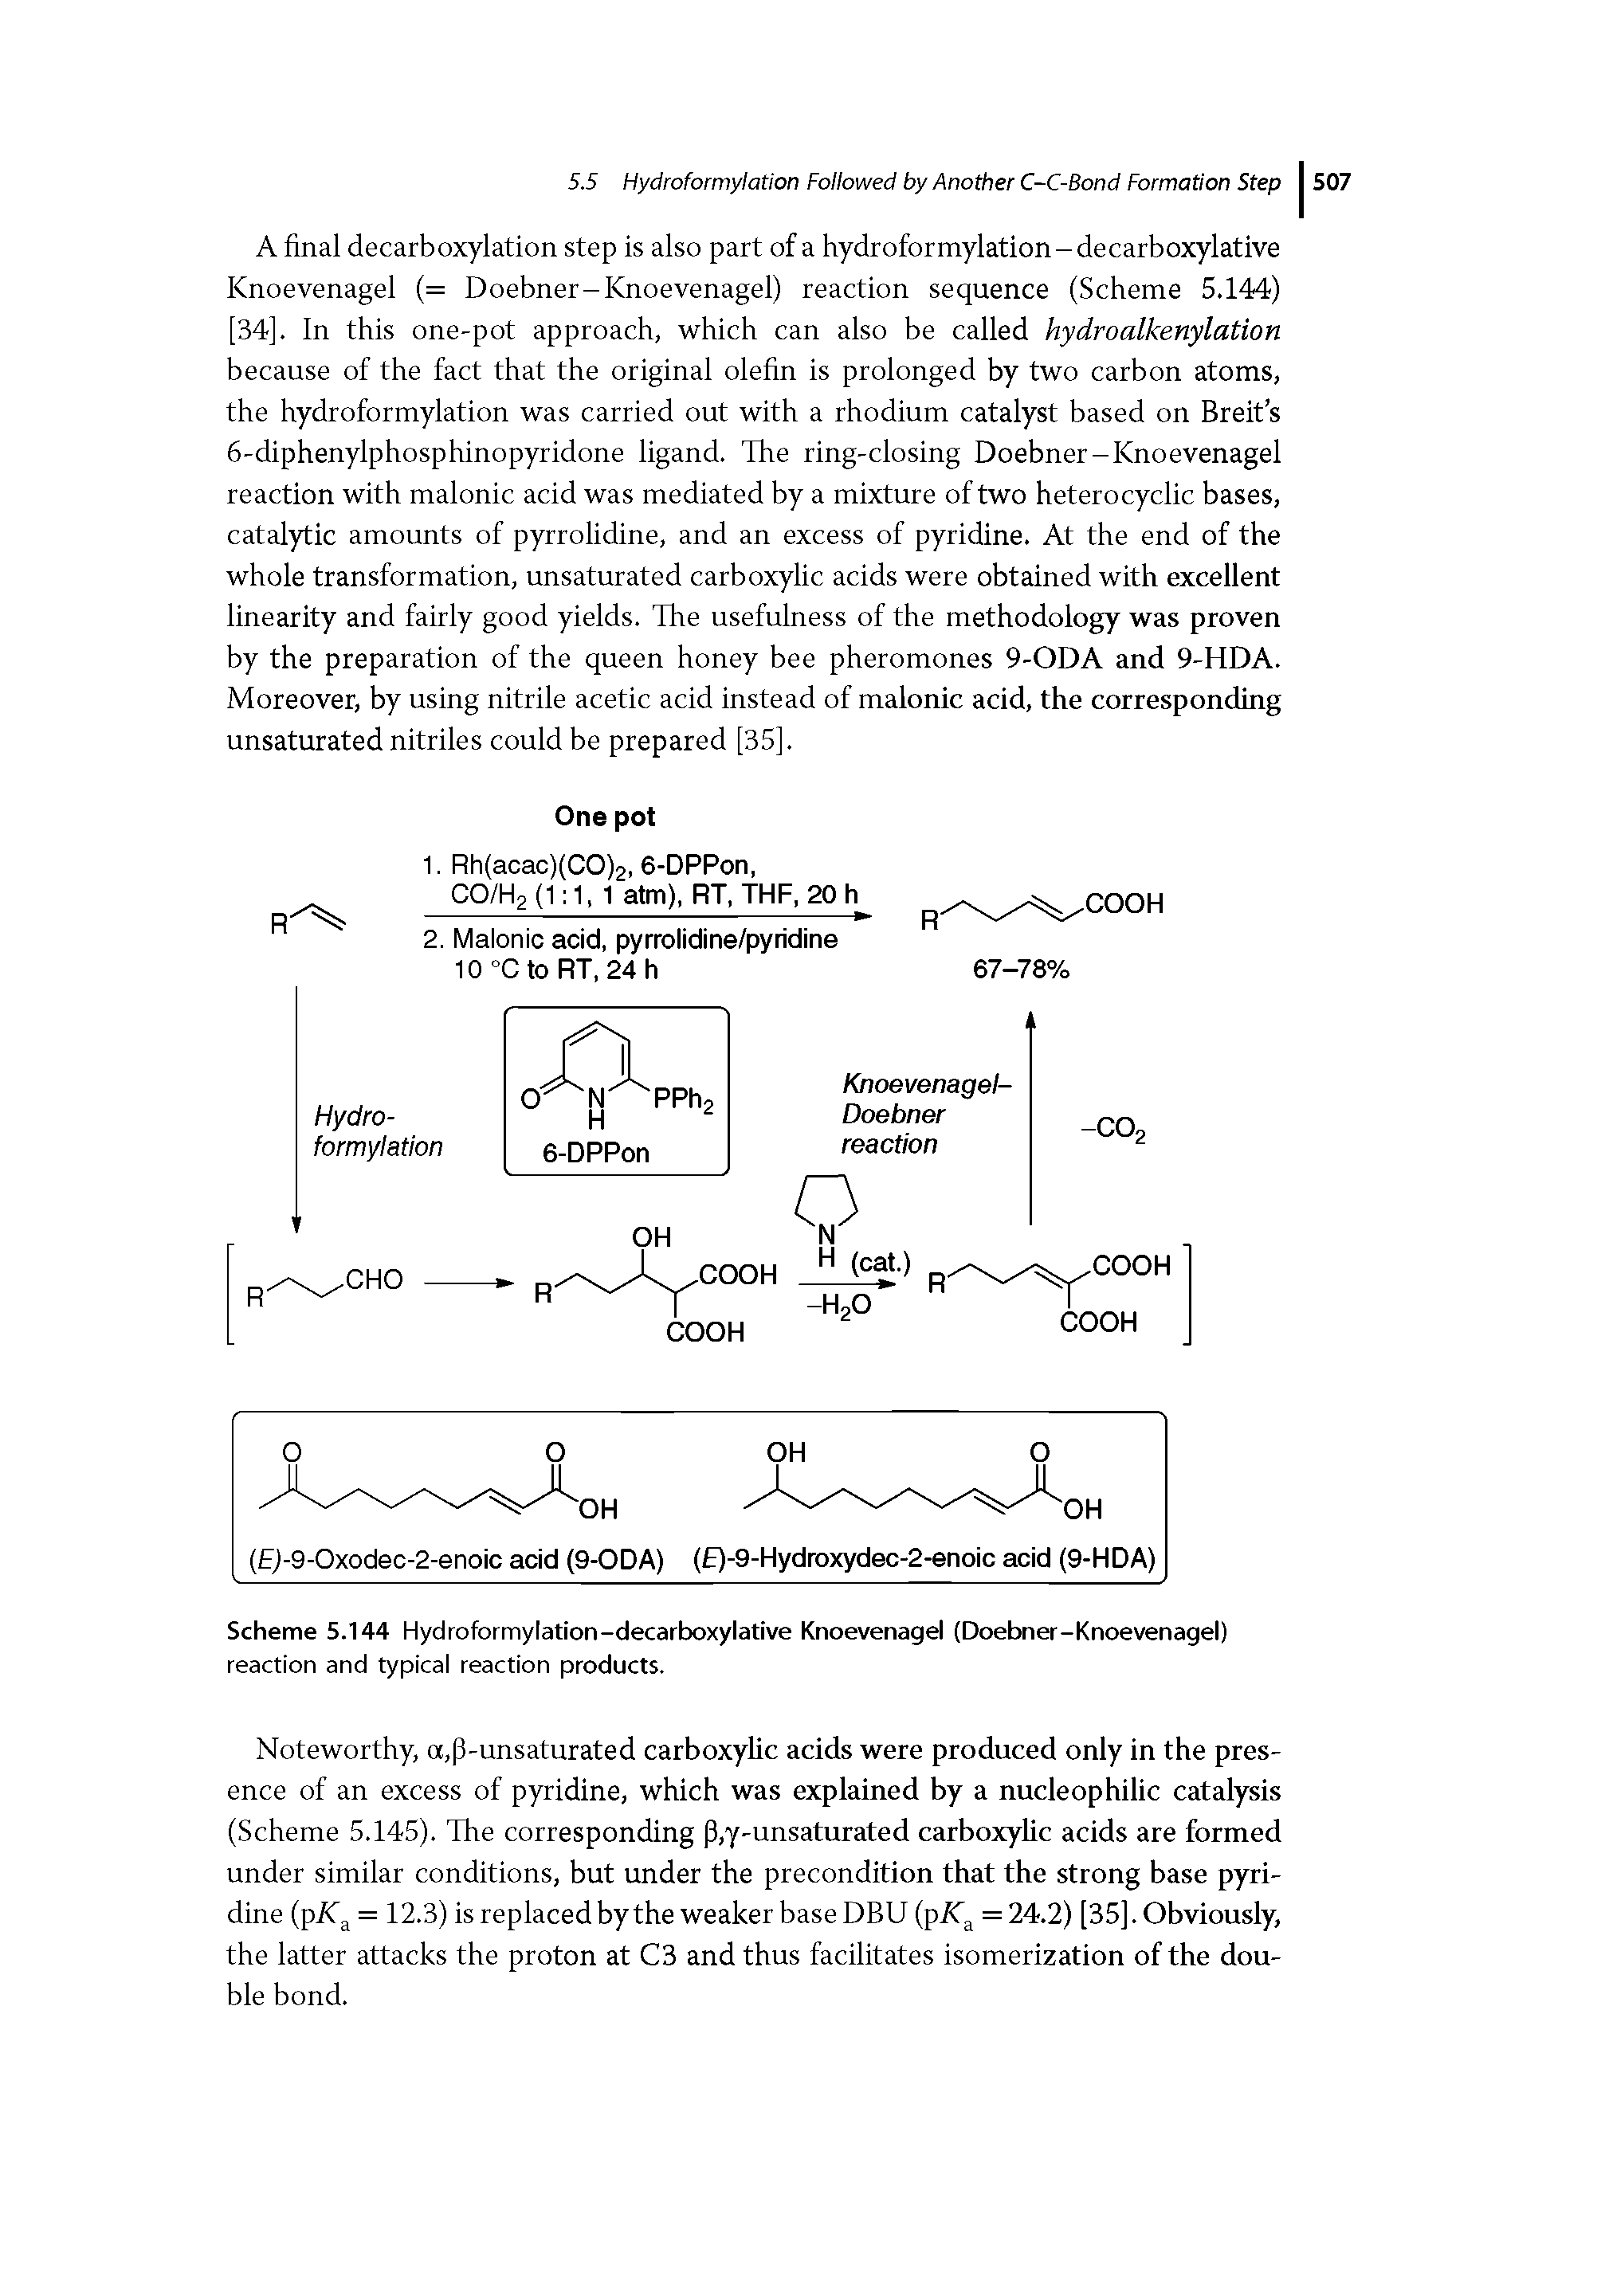 Scheme 5.144 Hydroformylation-decarboxylative Knoevenagel (Doebner-Knoevenagel) reaction and typical reaction products.